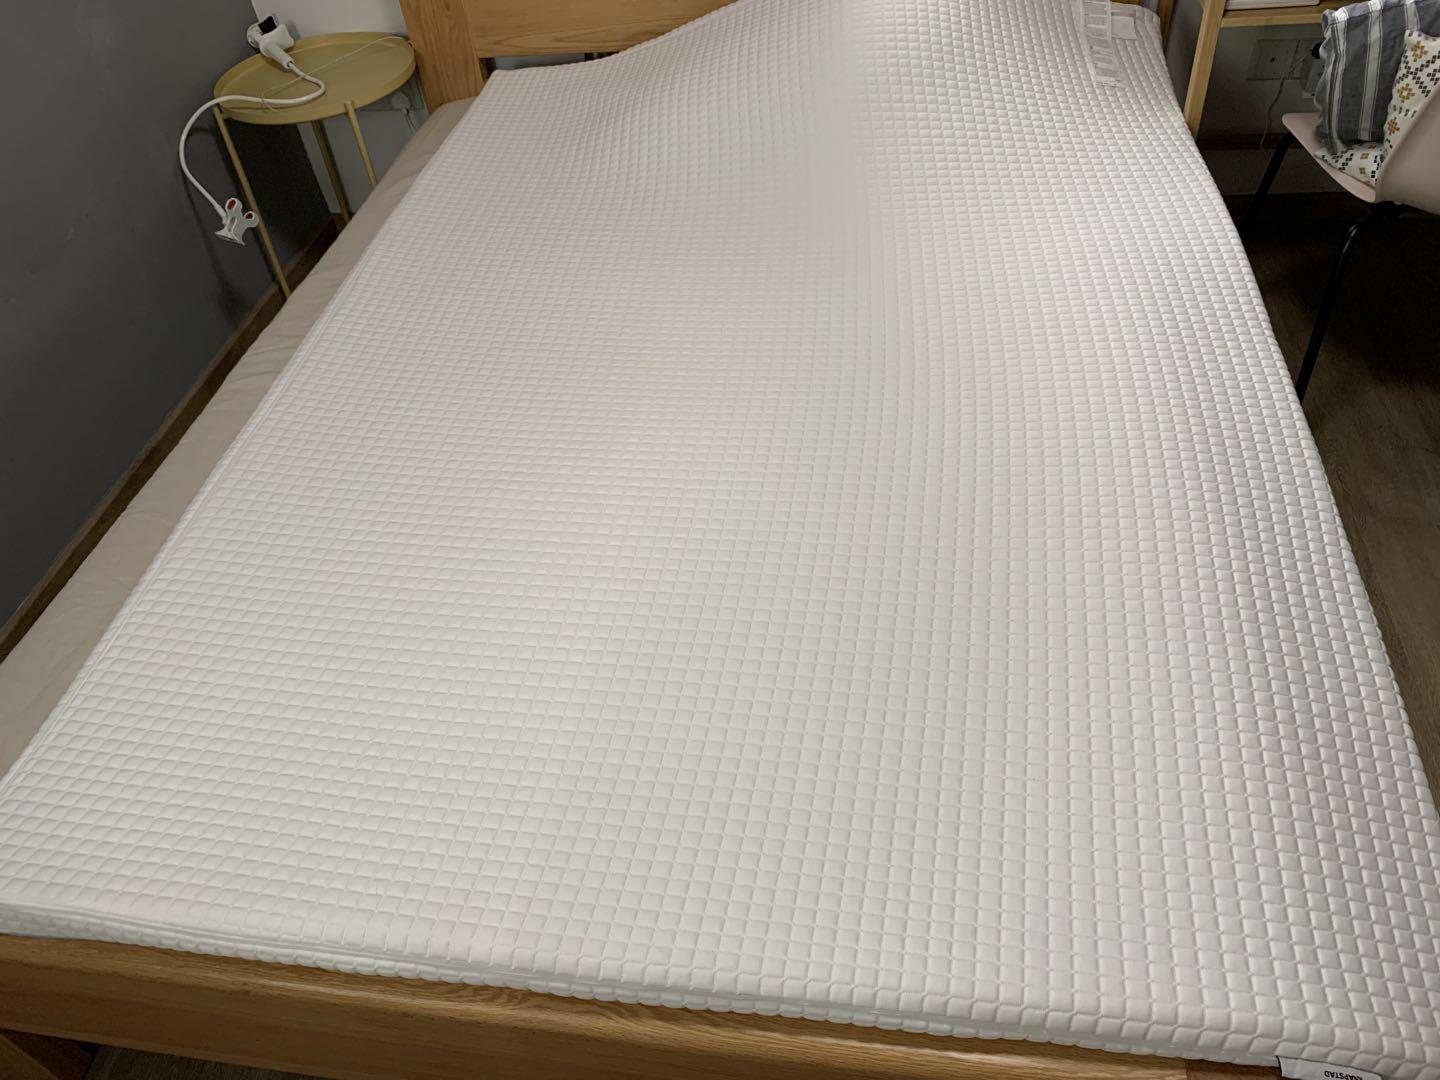 ikea mattress pad 72 hours